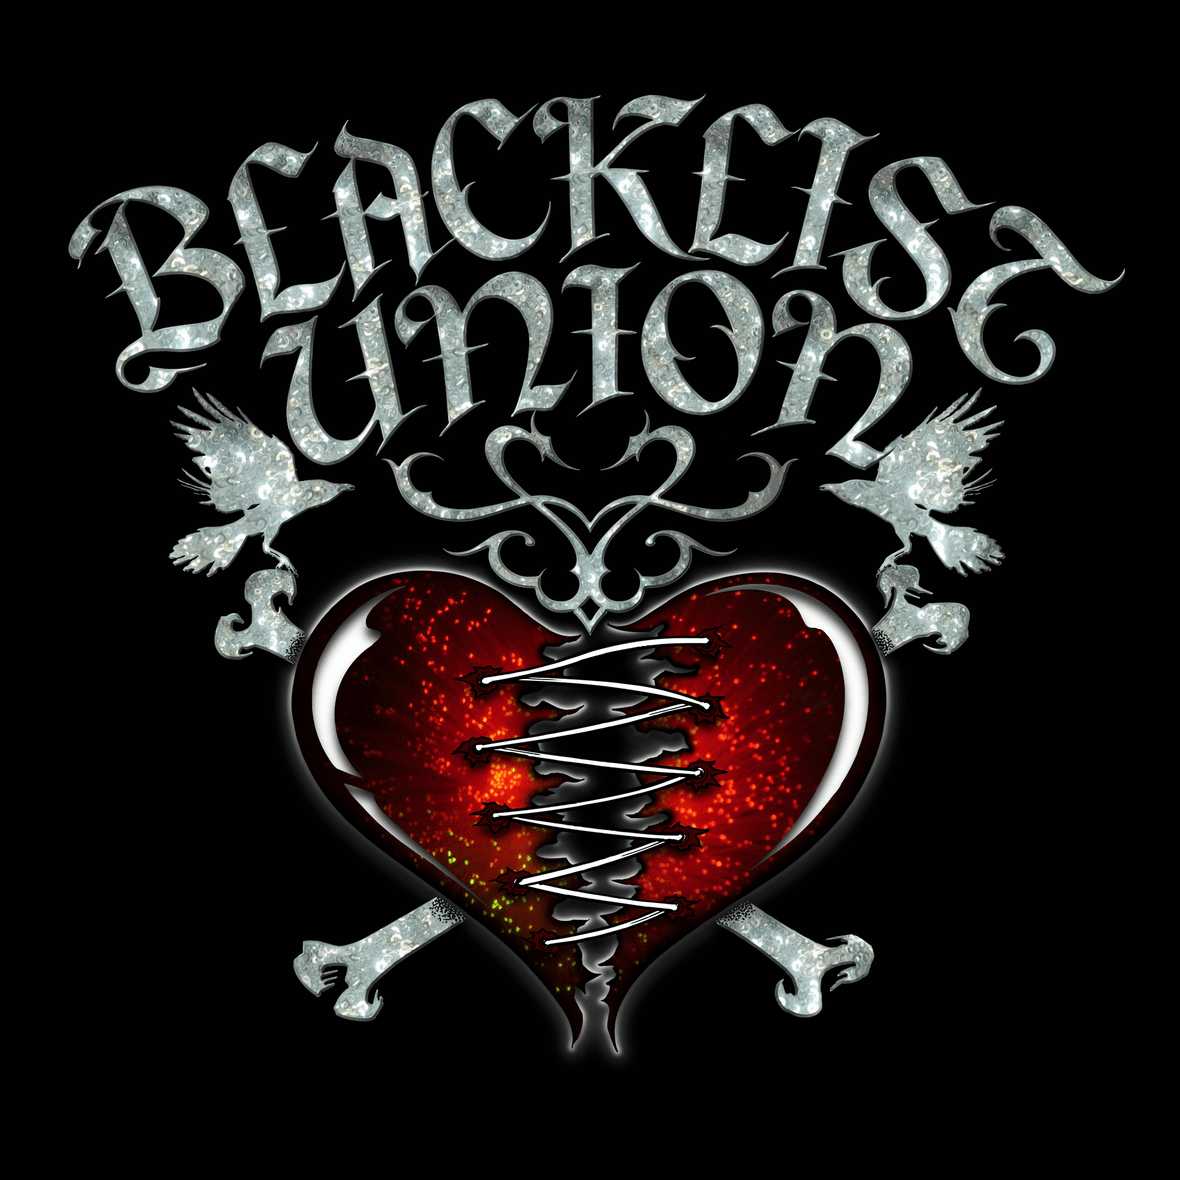 Blacklist Union Releases "Evil Eye" Music Video